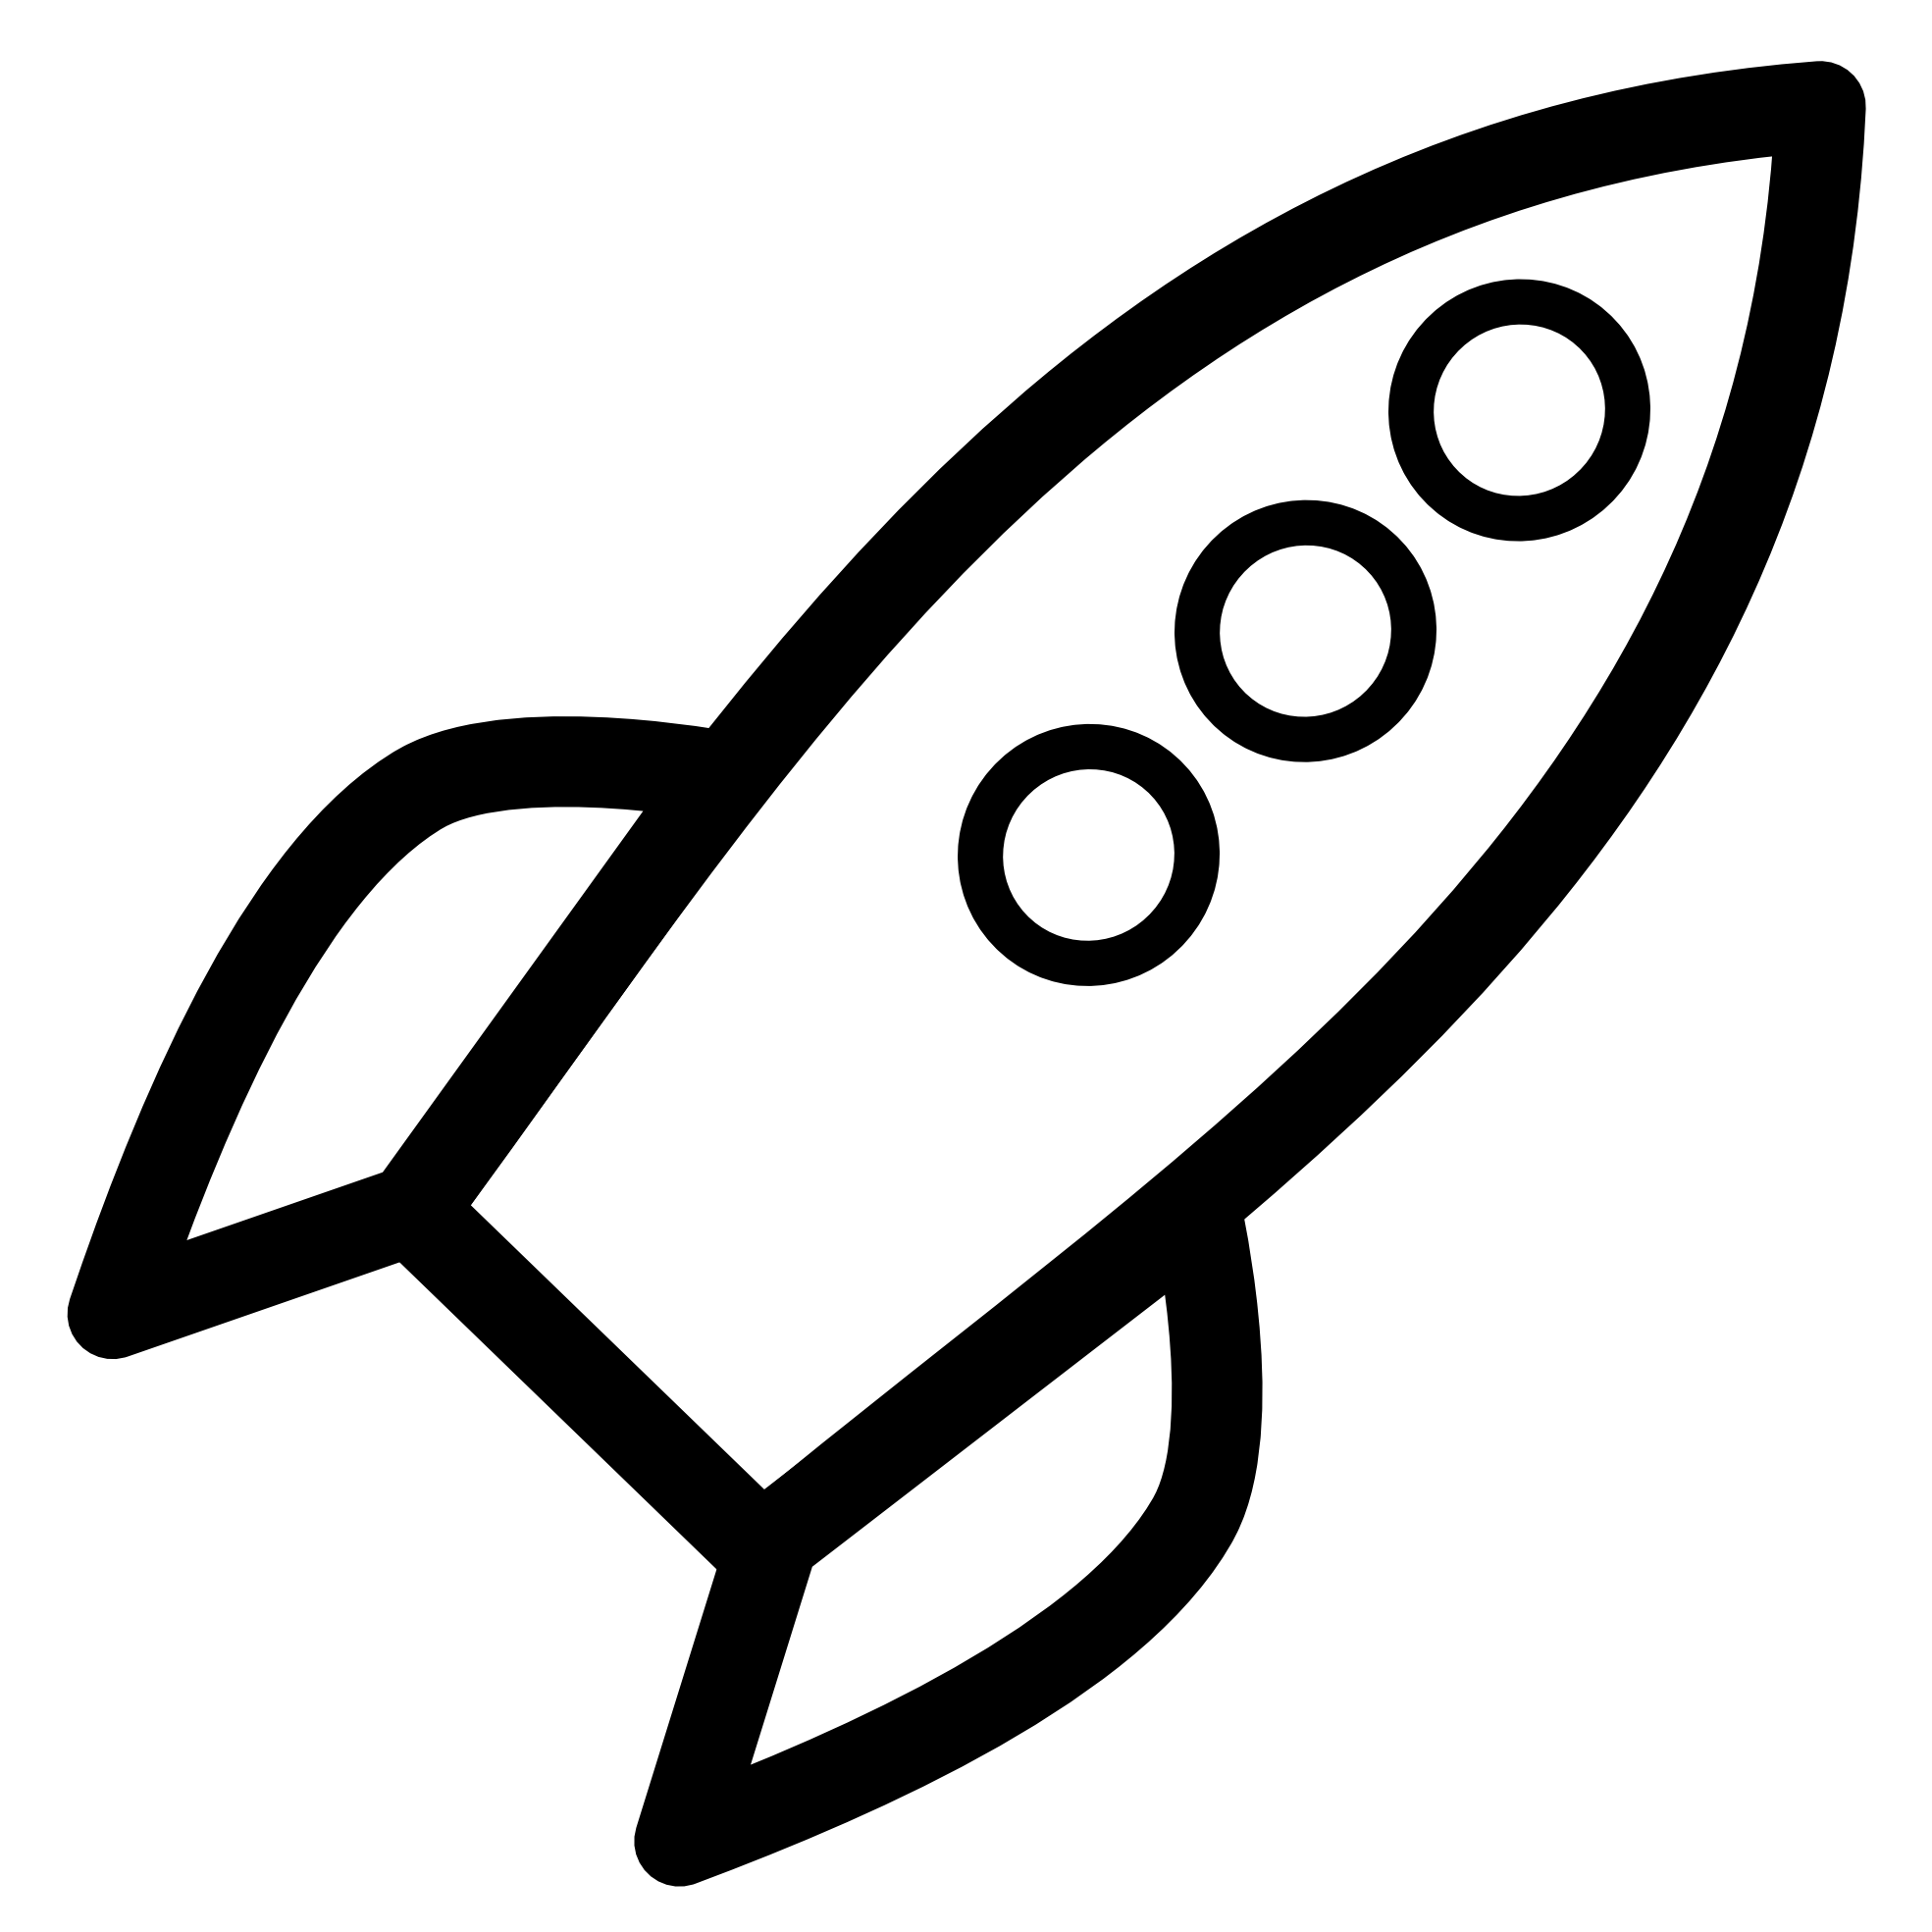 rocketship clipart space shuttle